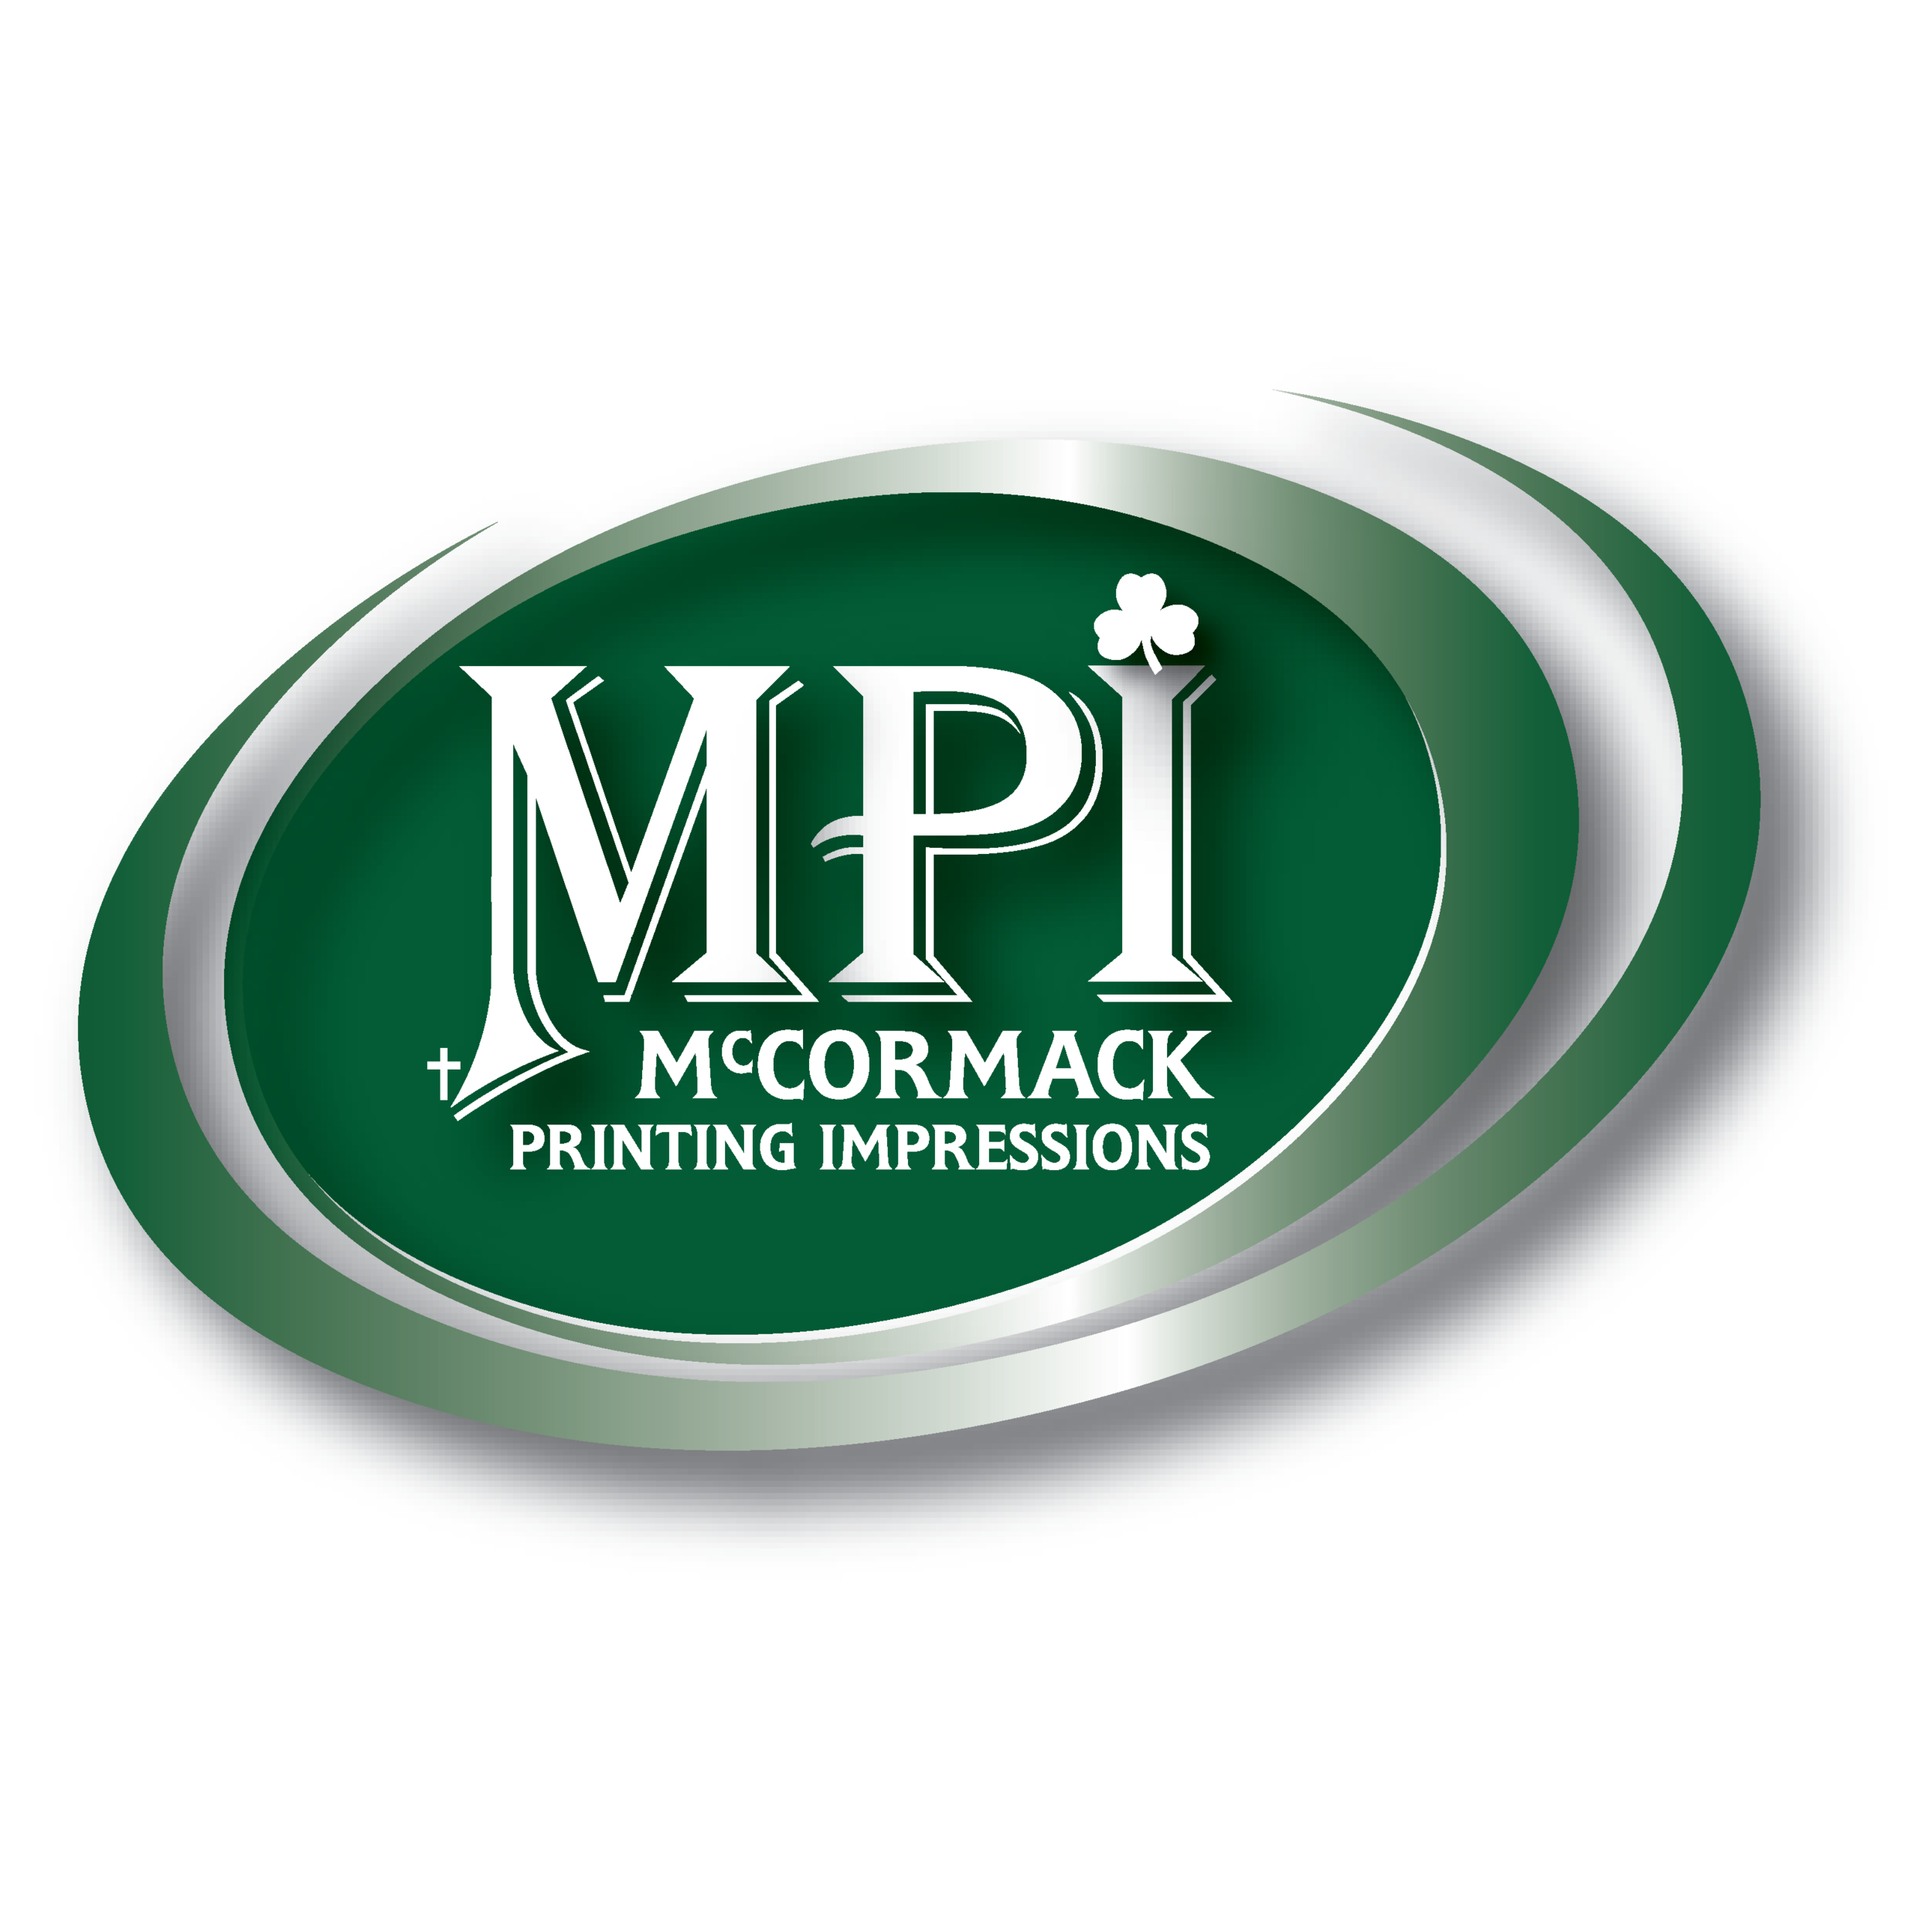 McCormack Printing Impressions